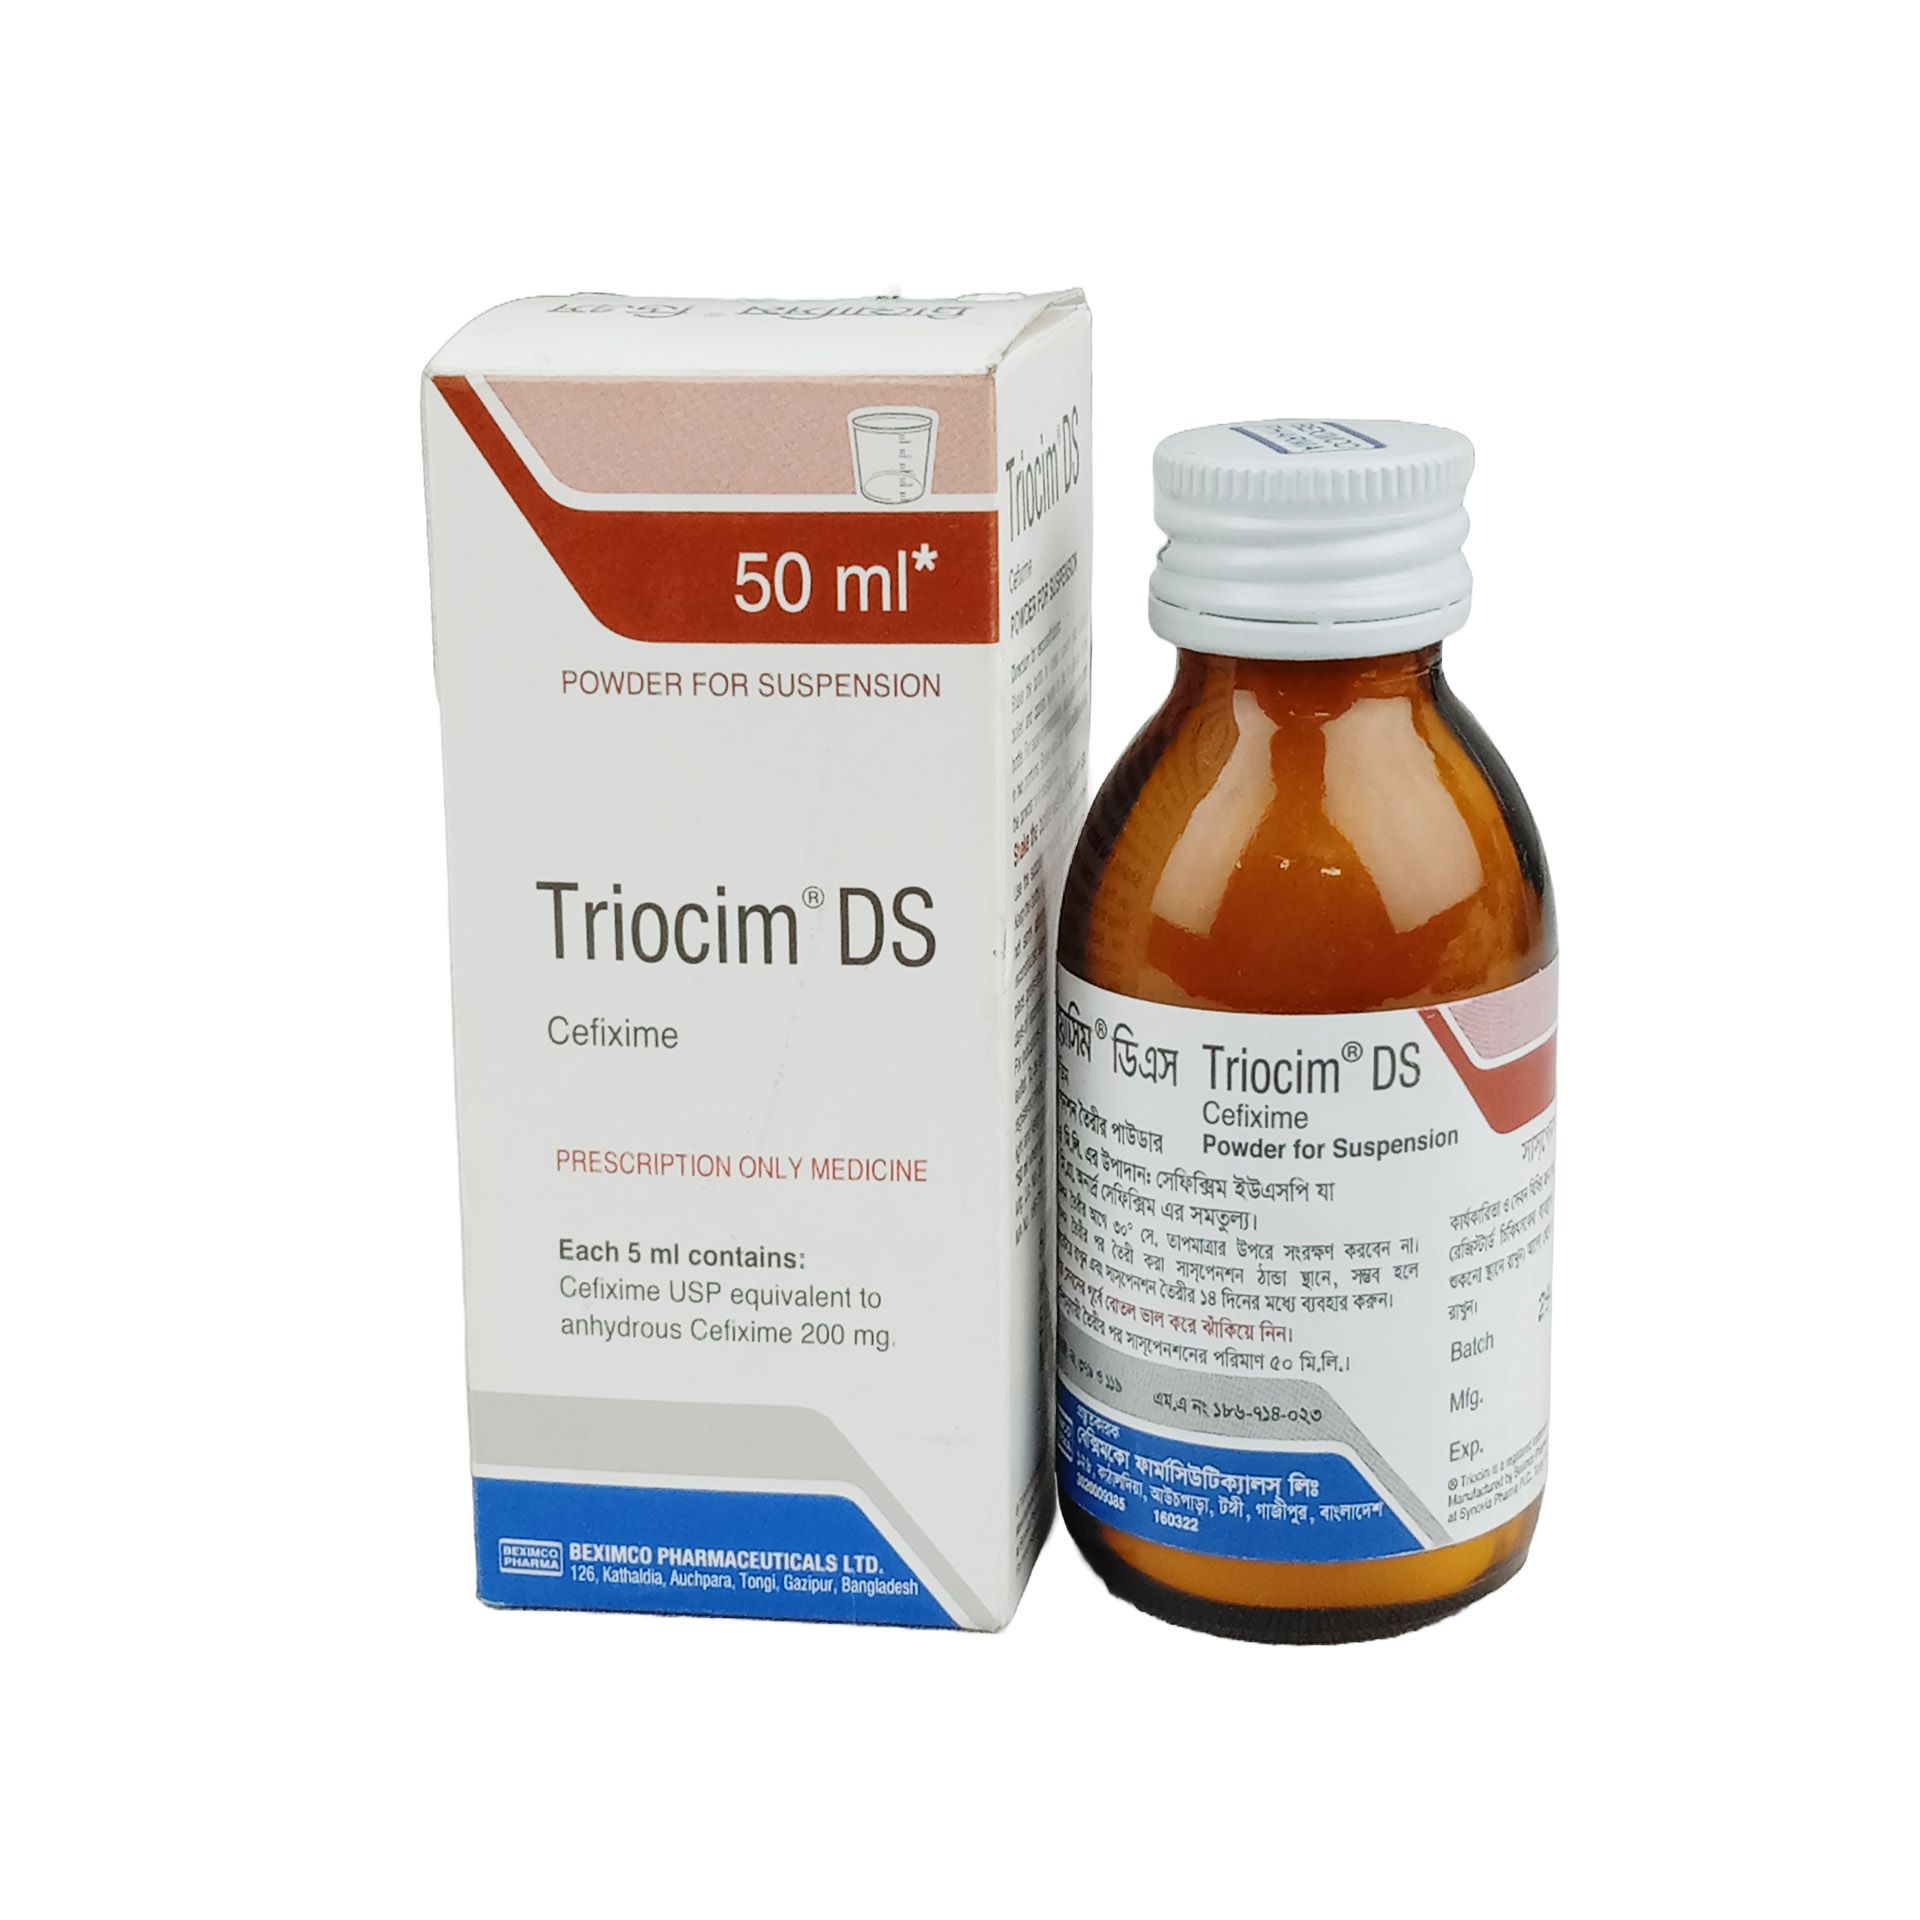 Triocim DS 200mg/5ml Powder for Suspension